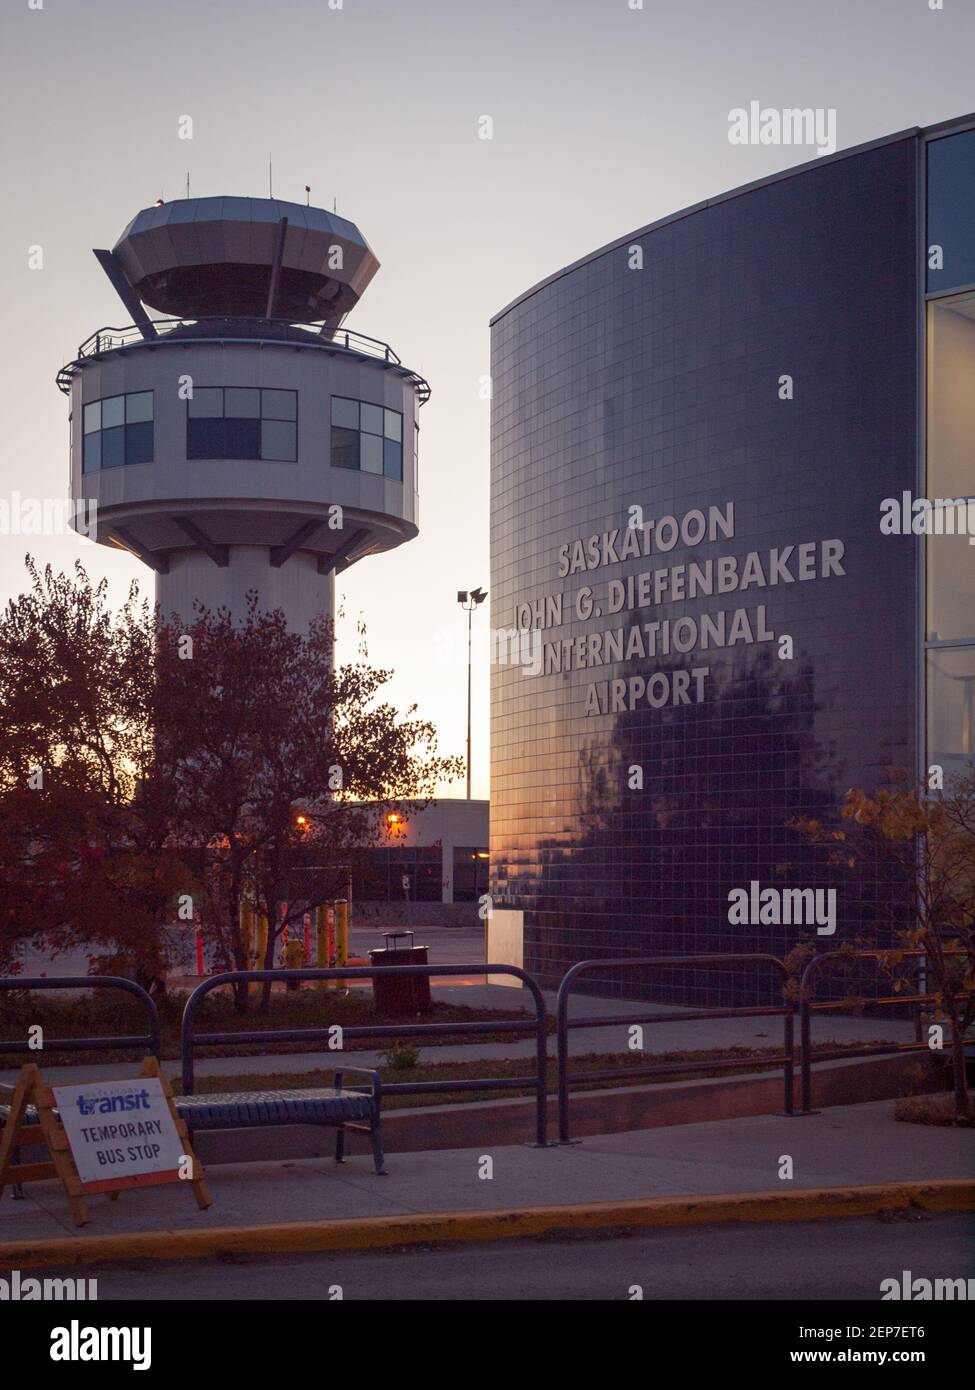 Blick auf den Kontrollturm und das Terminalgebäude des Saskatoon John G. Diefenbaker International Airport in Saskatoon, Saskatchewan, Kanada. Stockfoto